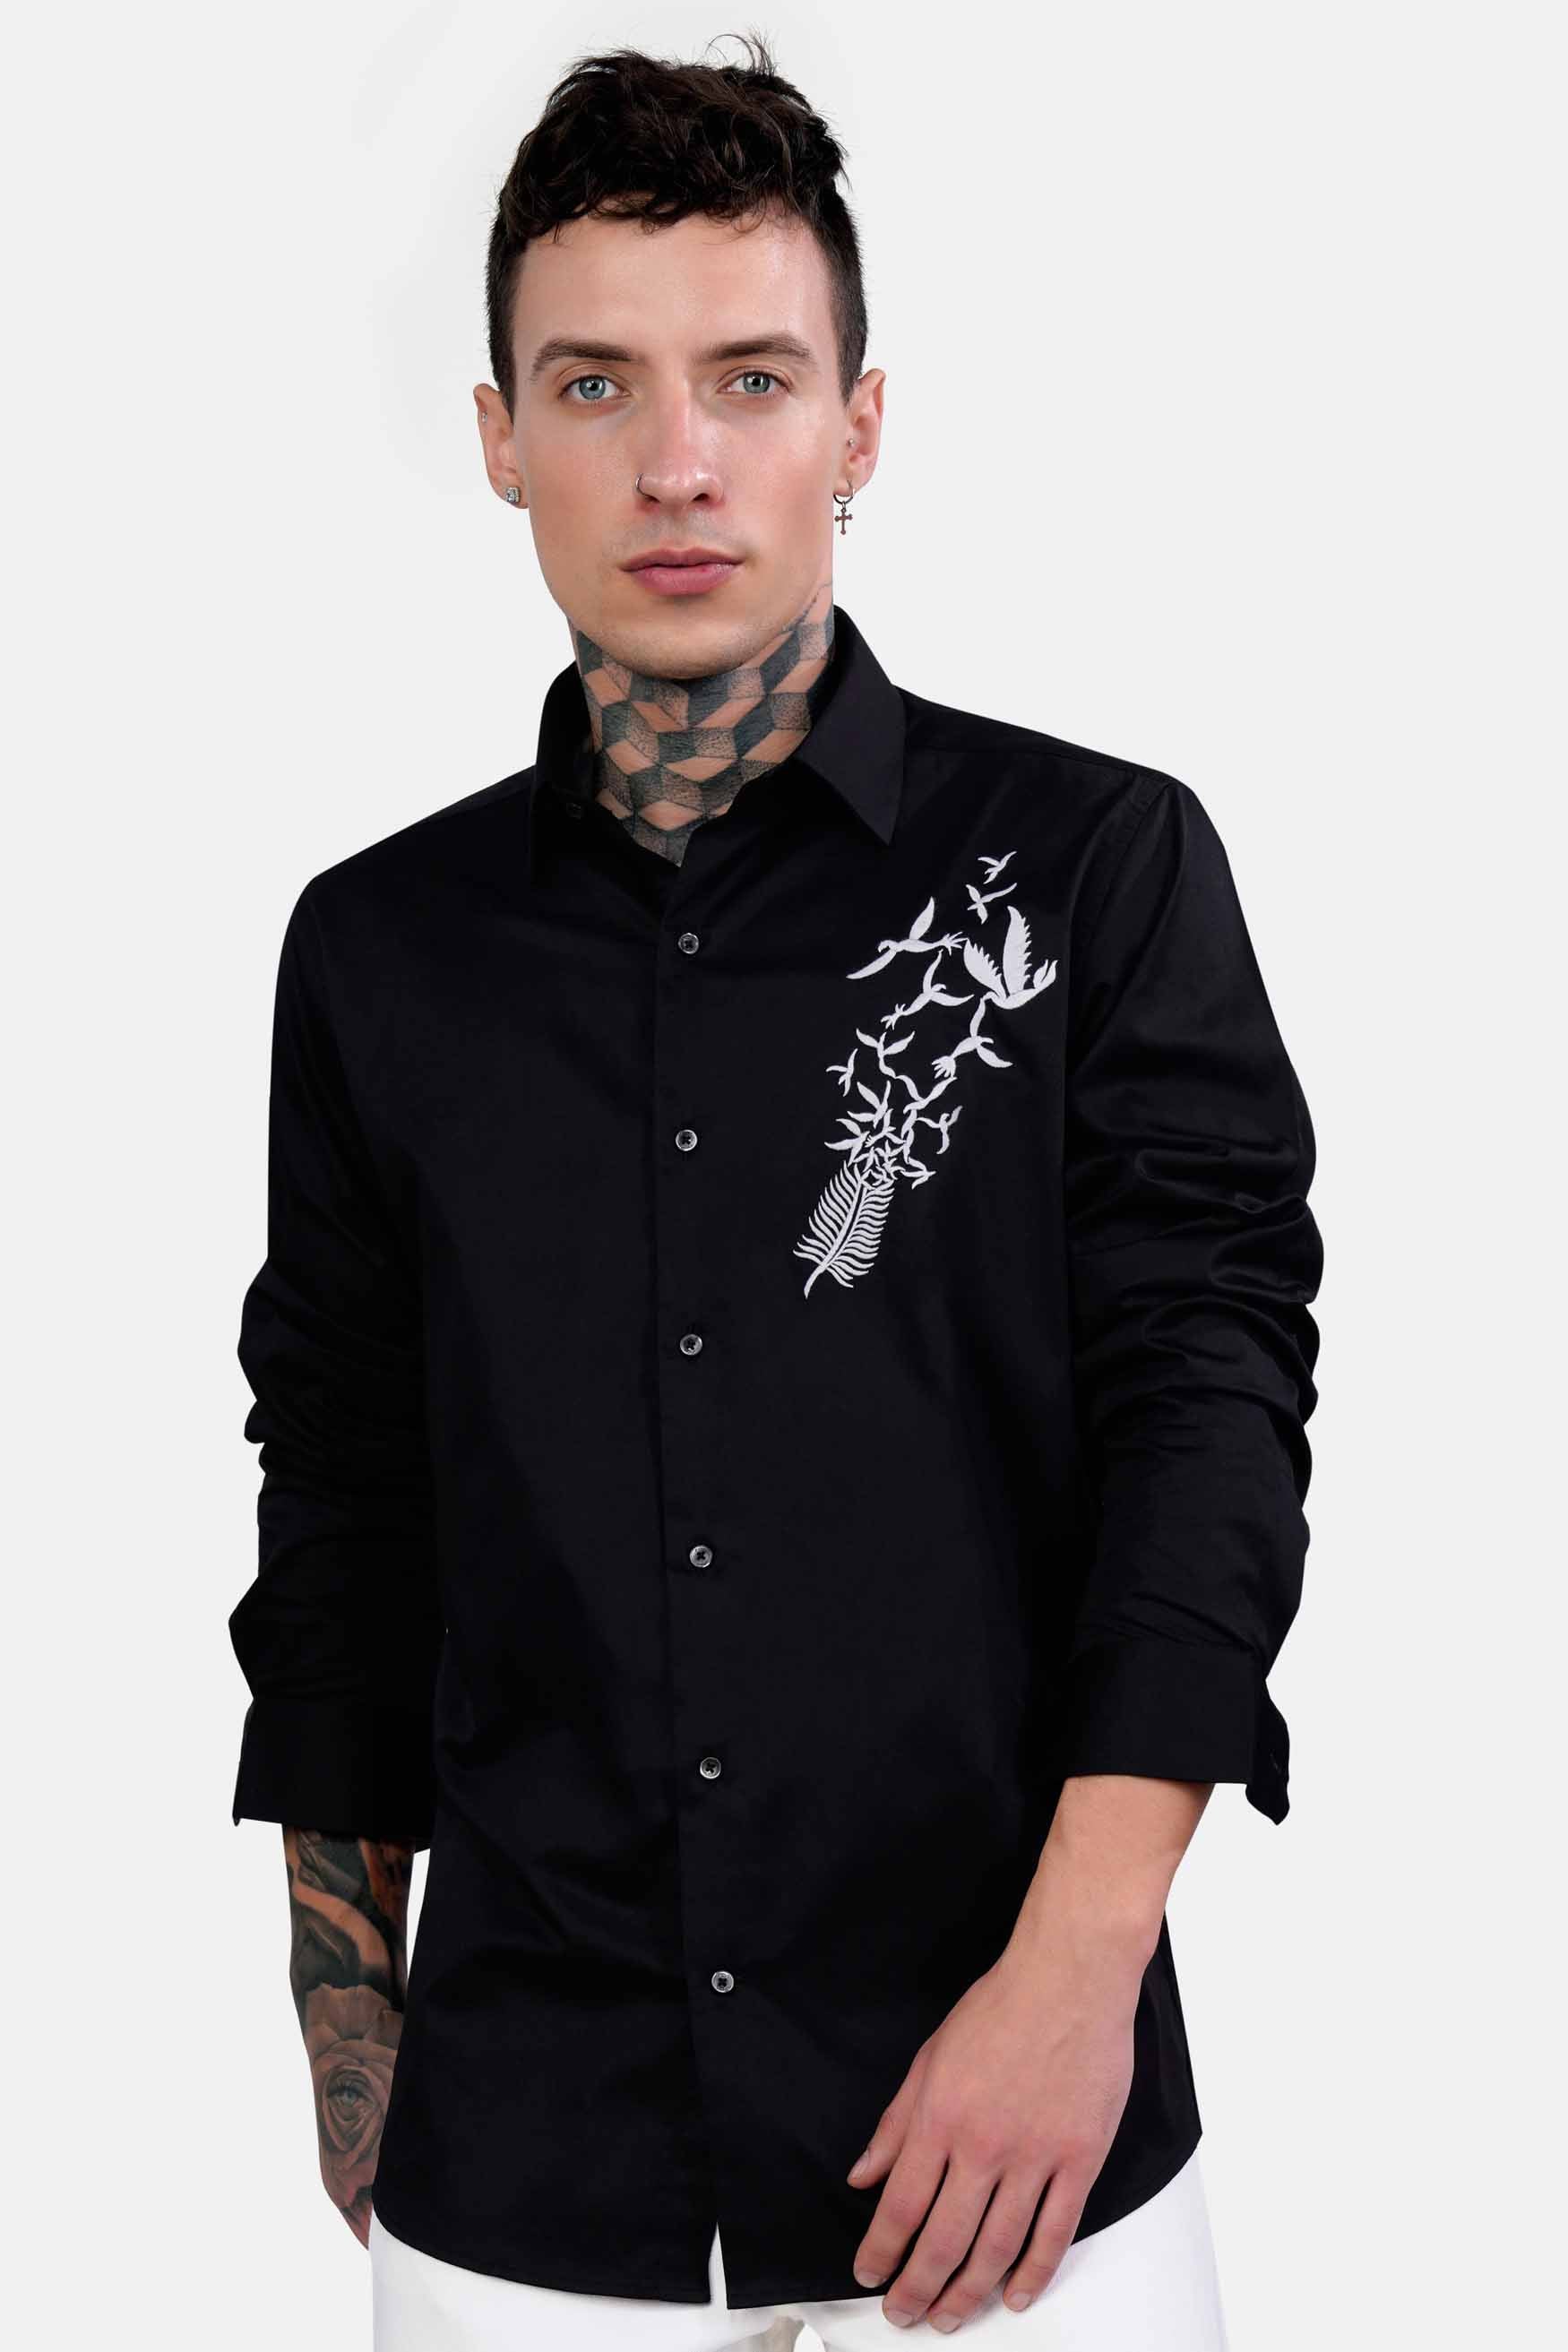 Jade Black Birds Embroidered Subtle Sheen Super Soft Premium Cotton Designer Shirt